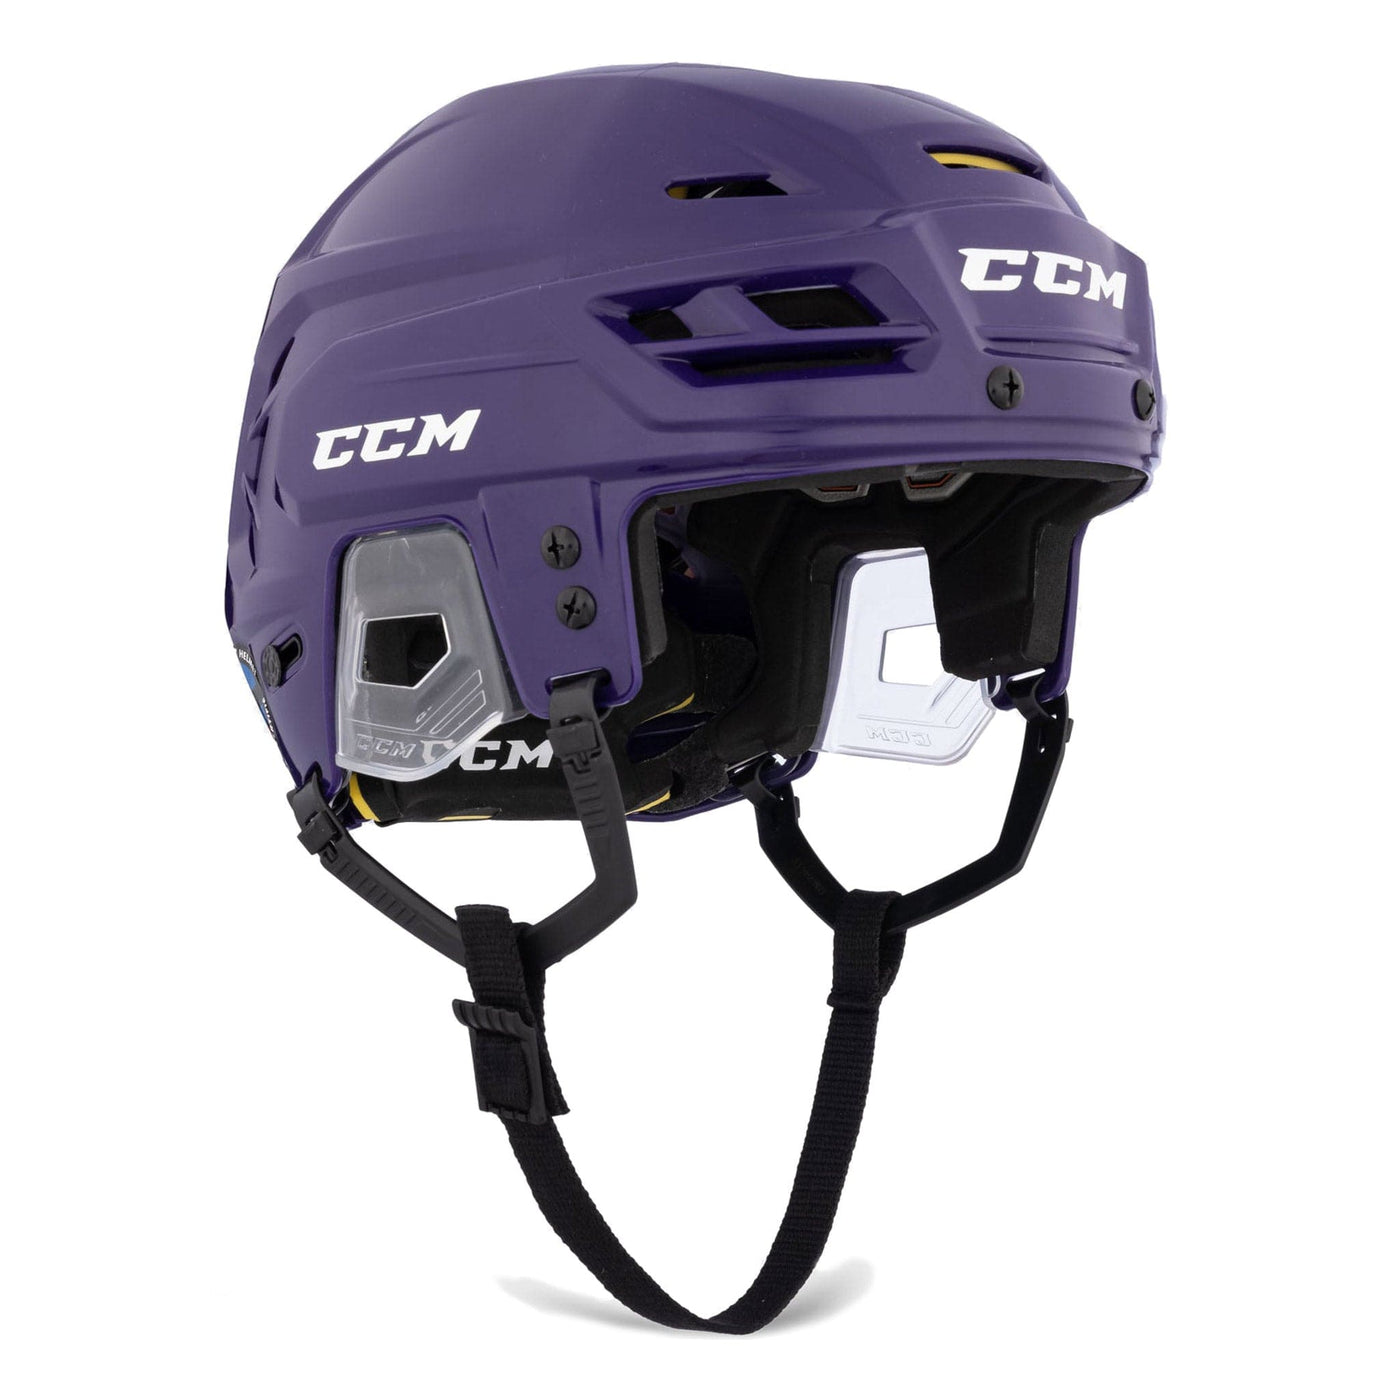 CCM Tacks 710 Hockey Helmet - The Hockey Shop Source For Sports